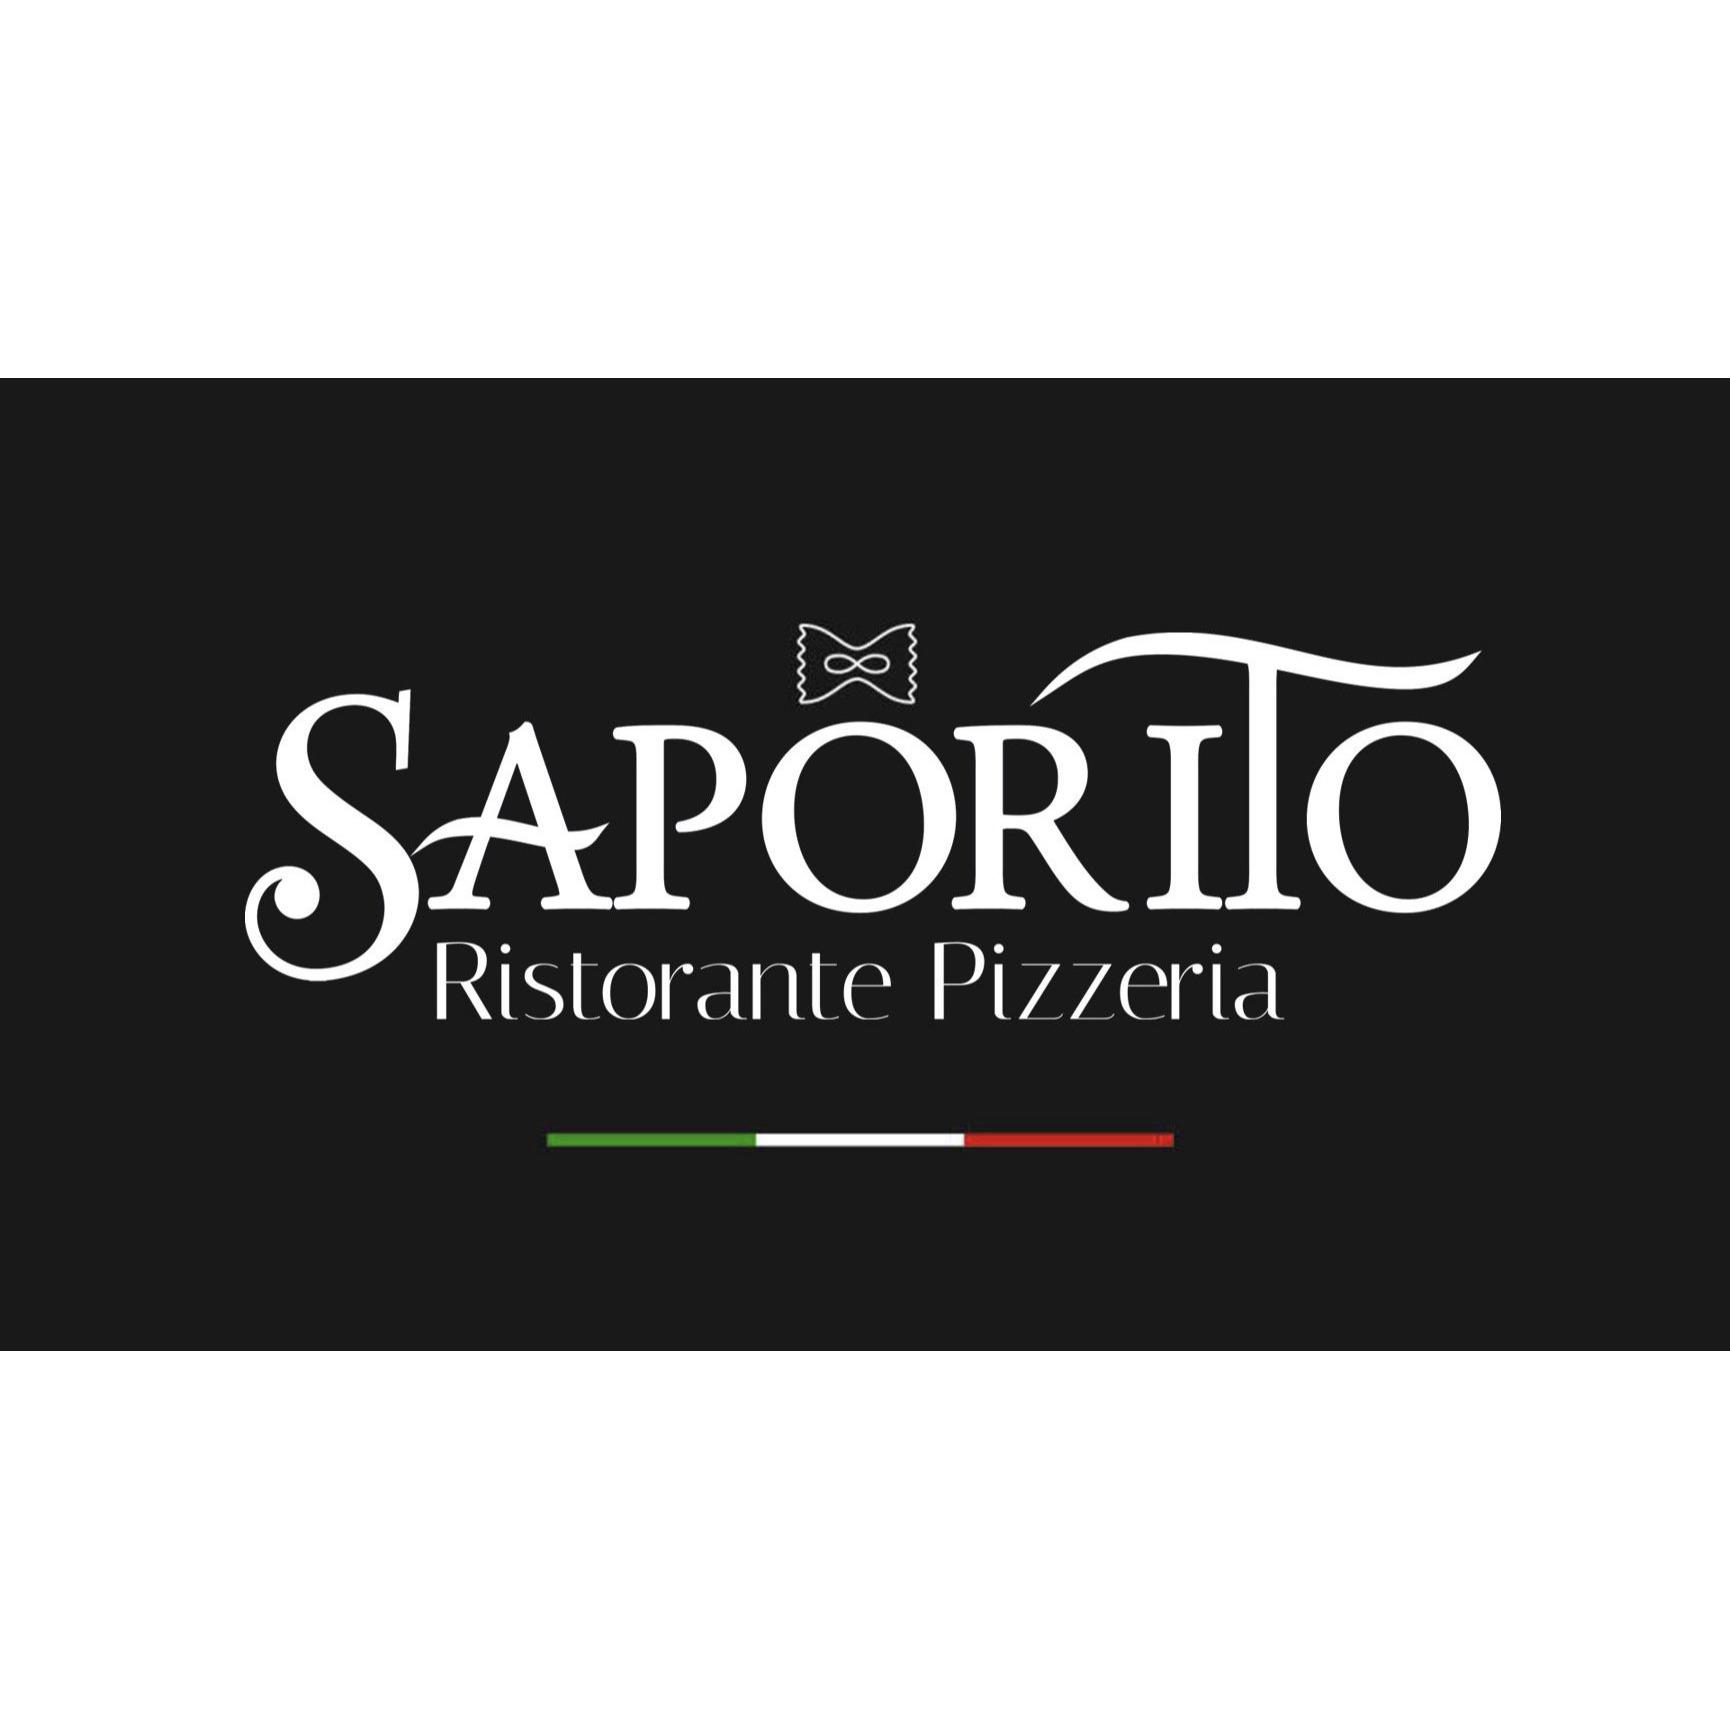 Restaurant SAPORITO Ristorante Pizzeria Logo